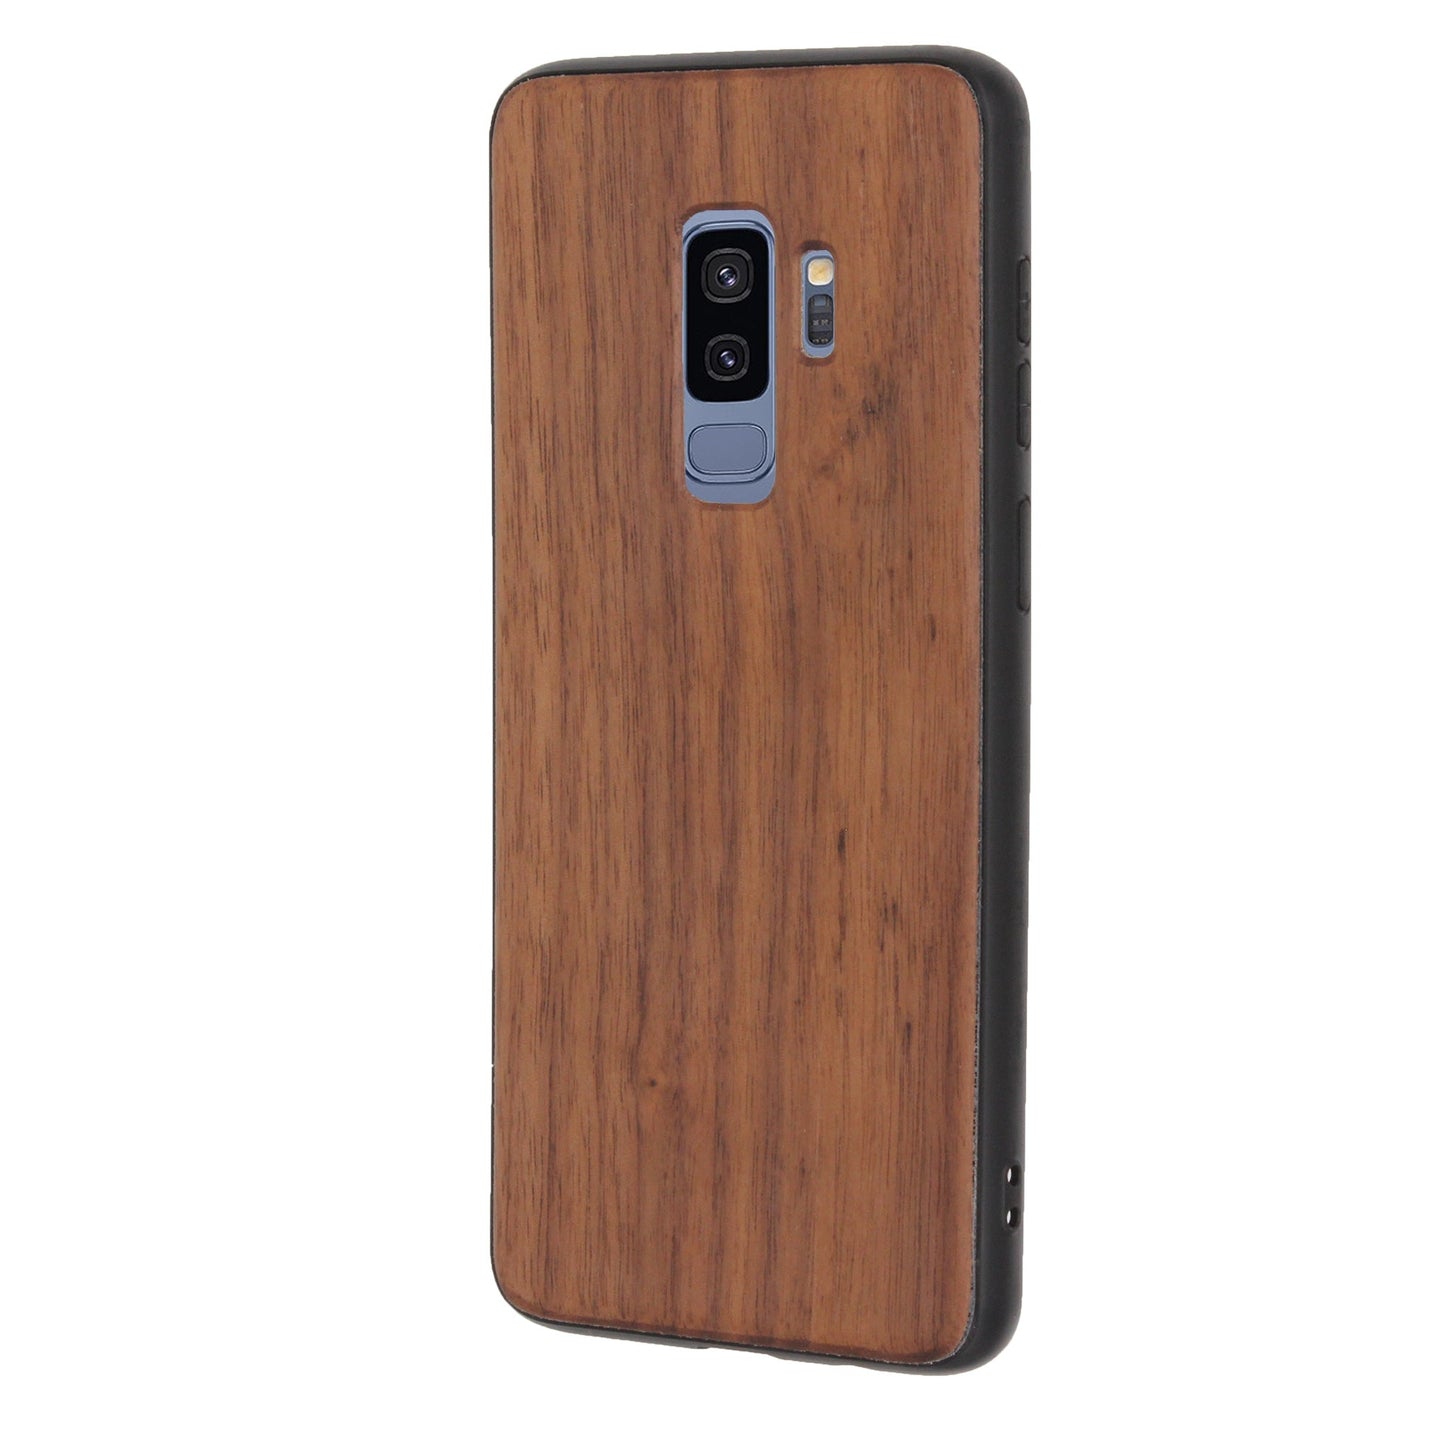 Eden case made of walnut wood for Samsung Galaxy S9 Plus